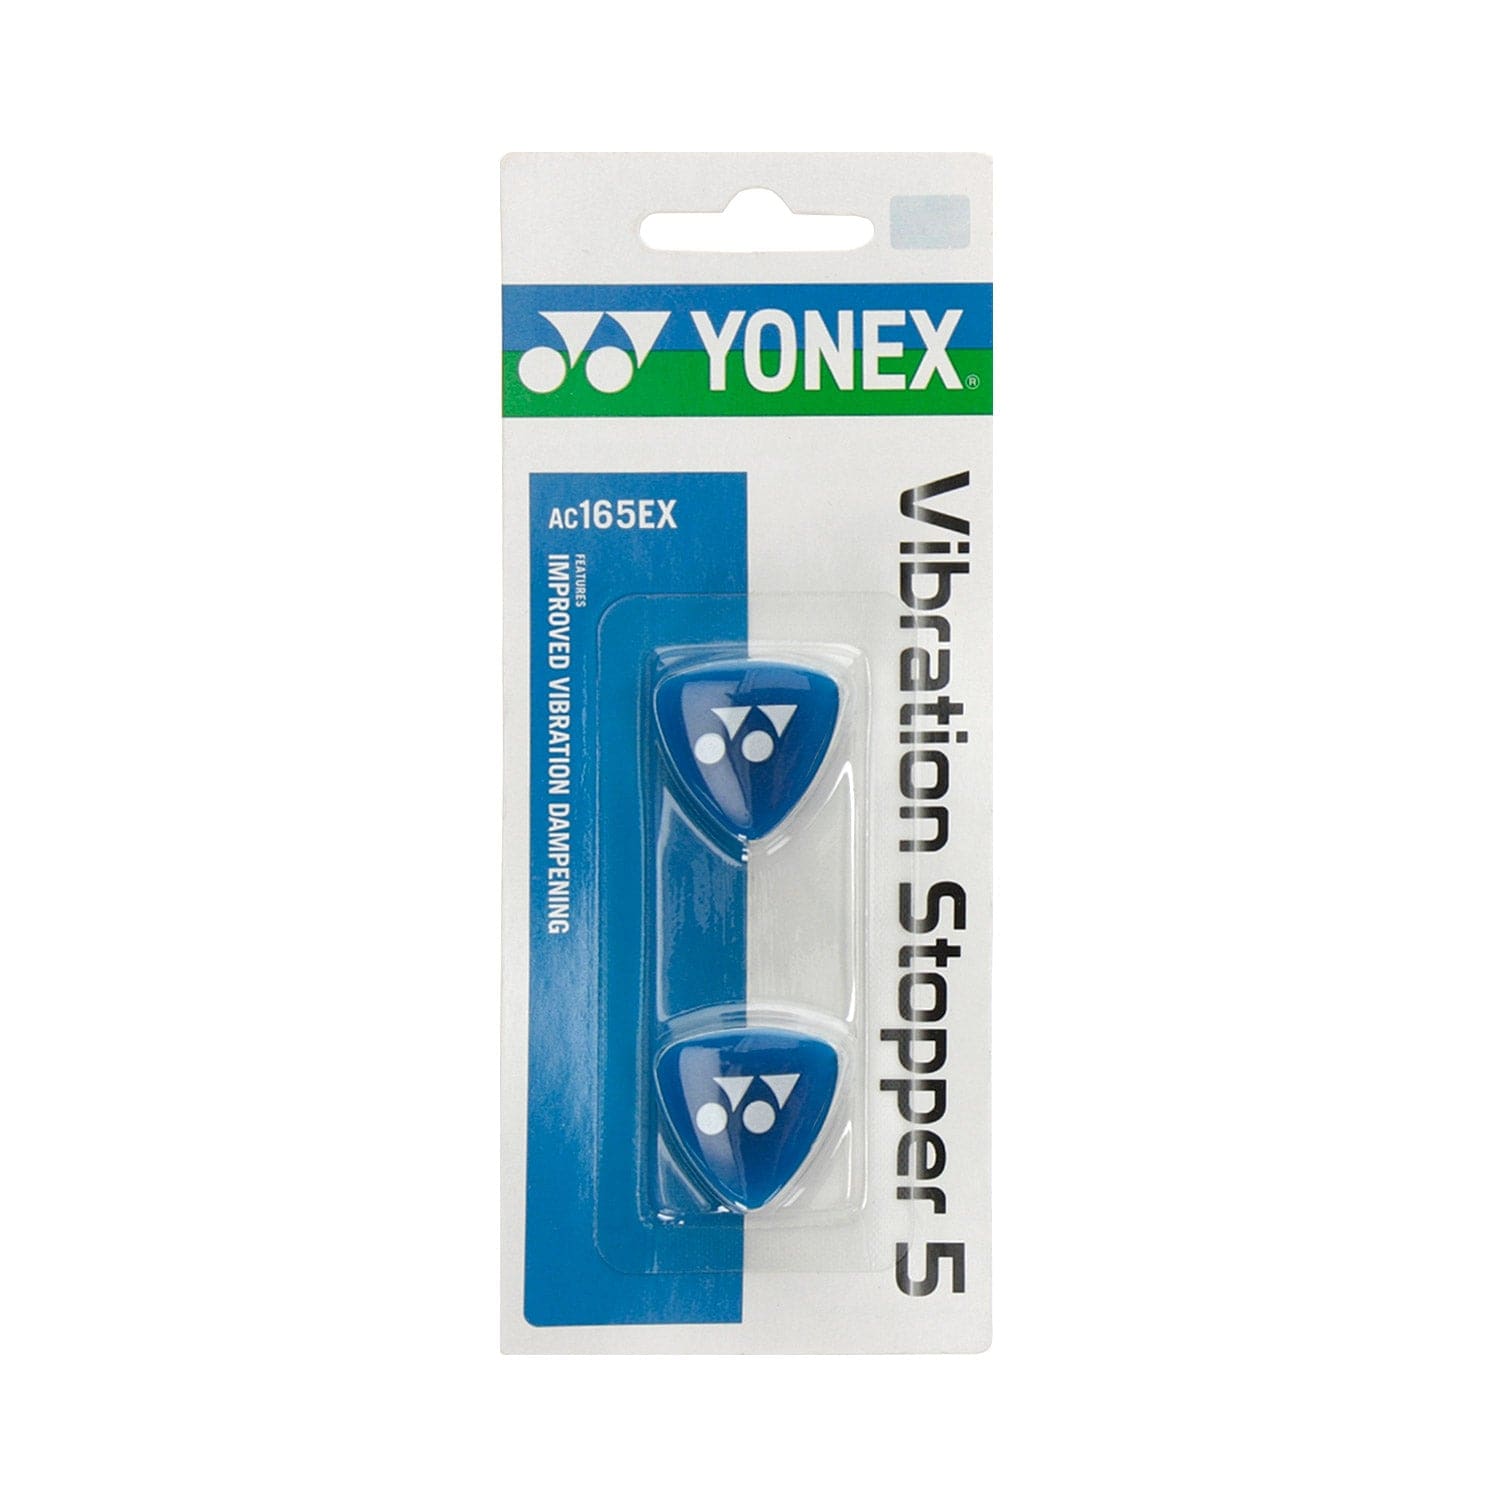 Yonex Vibration Dampener